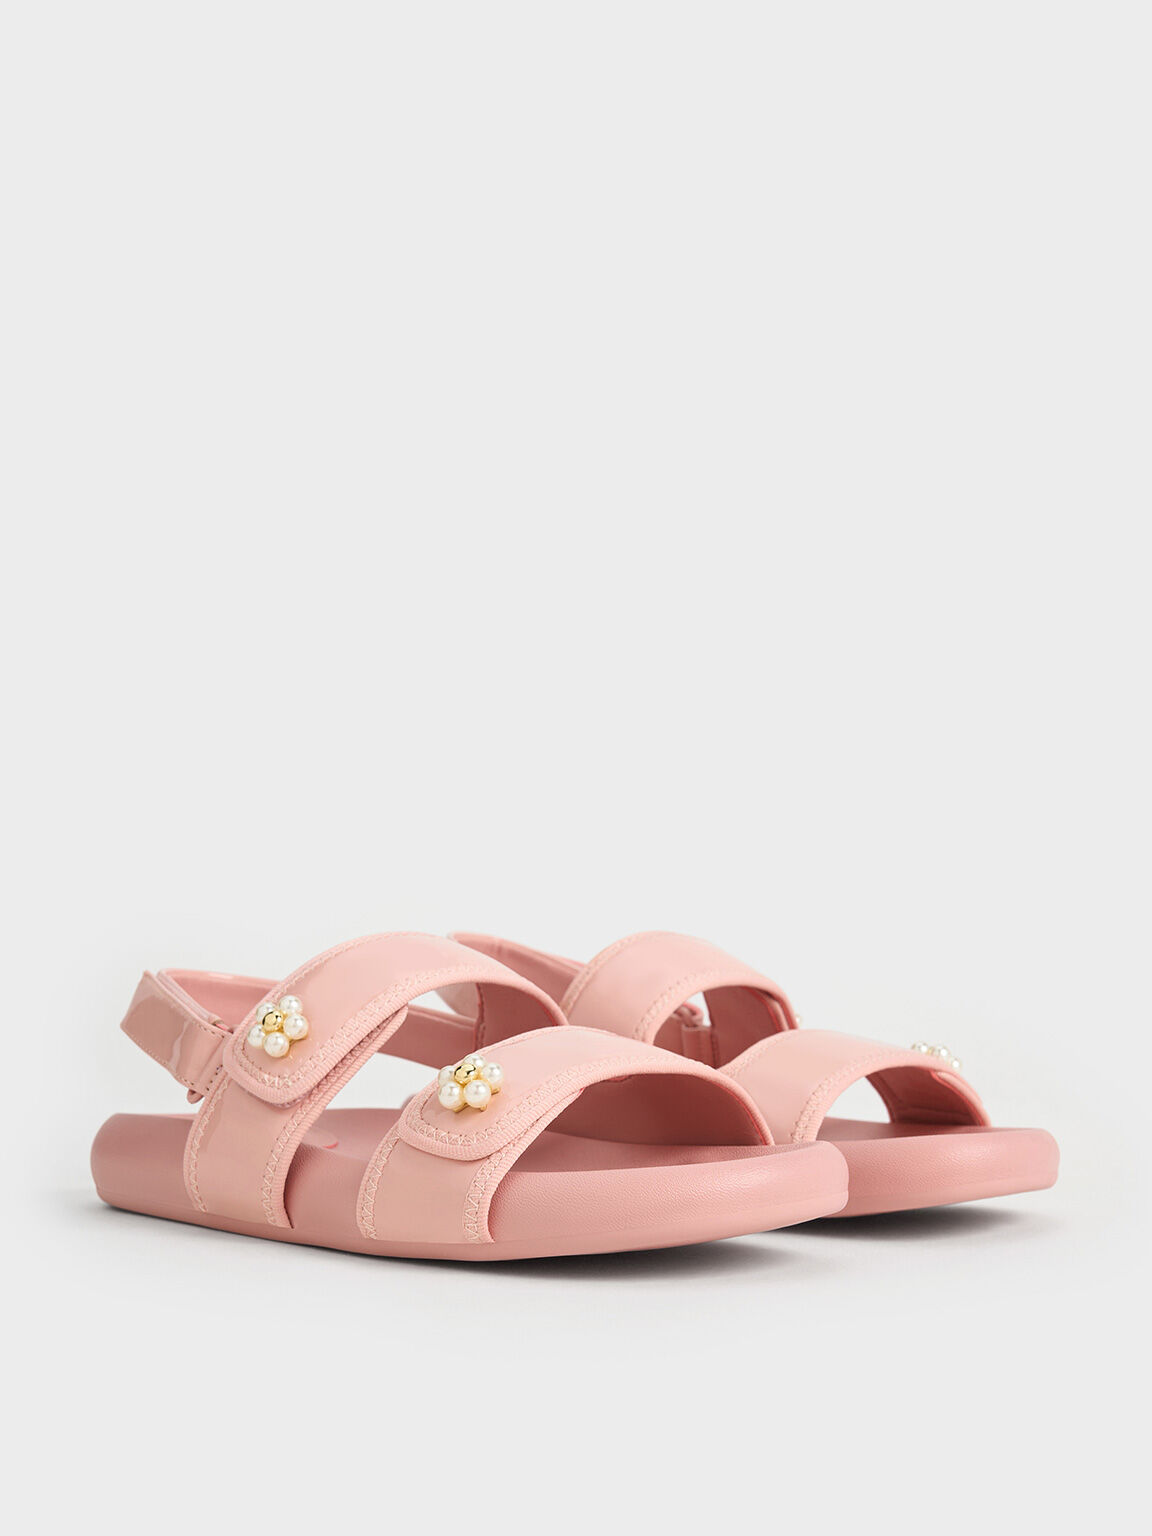 Girls' Plaid Beaded-Flower Sandals, Pink, hi-res